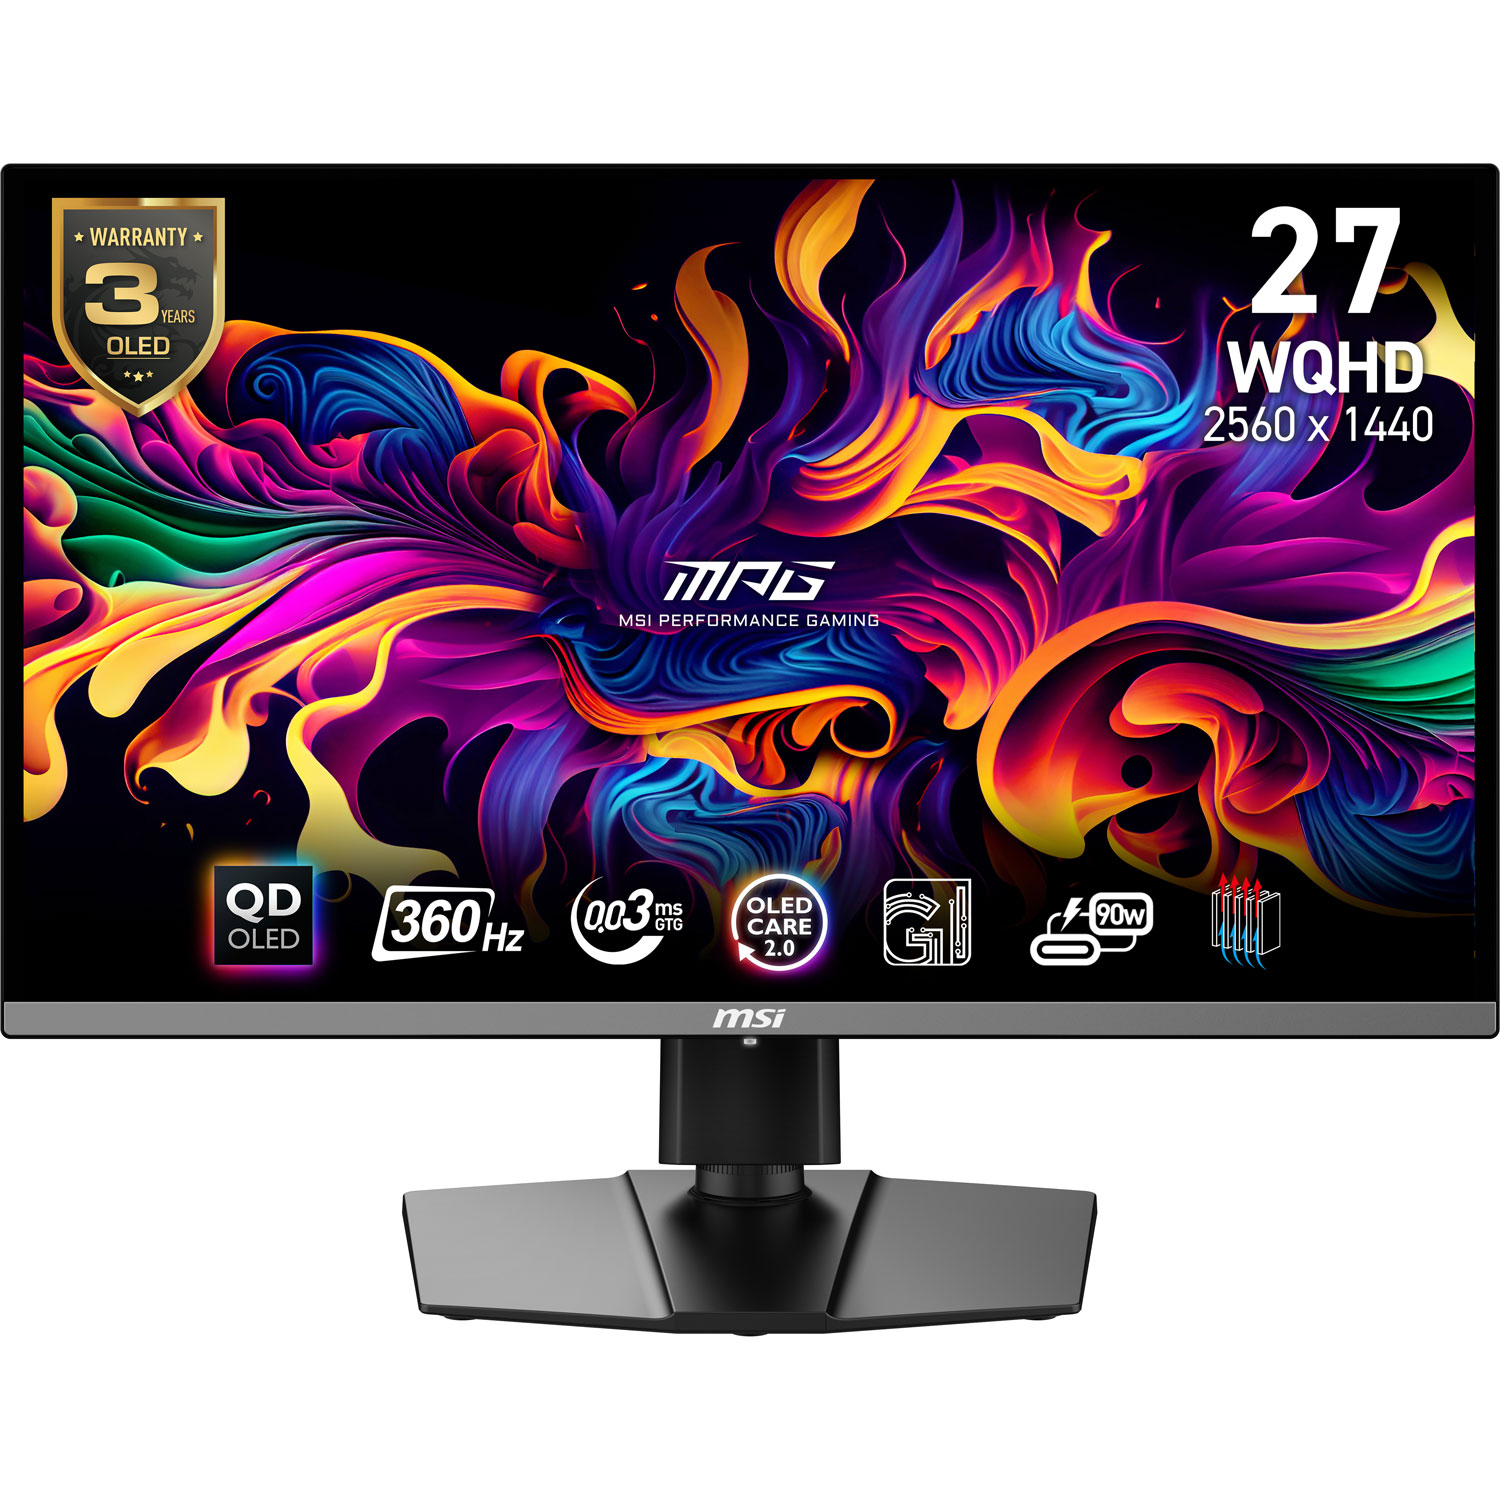 MSI 27" WQHD 360Hz 0.03ms GTG QD-OLED Gaming Monitor (MPG 271QRX QD-OLED) - Black